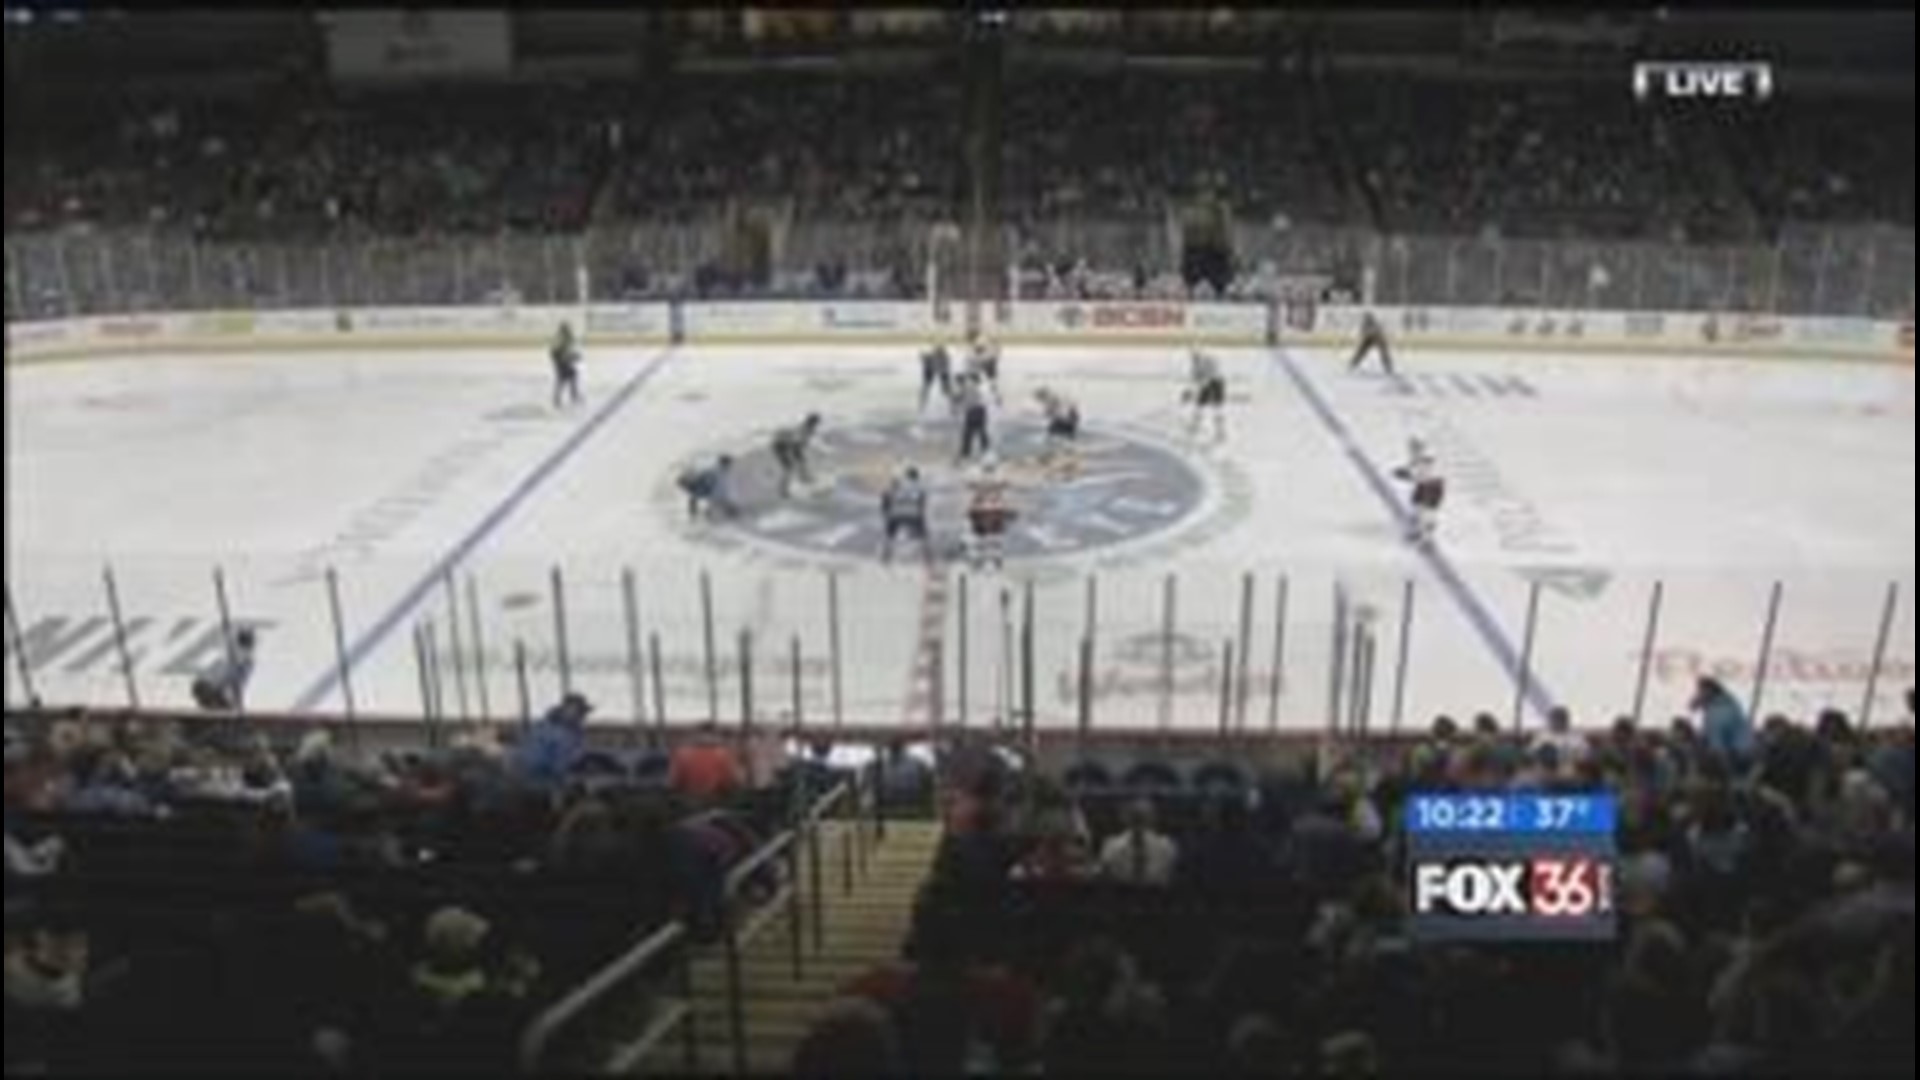 ECHL hockey: Indianapolis vs. Toledo